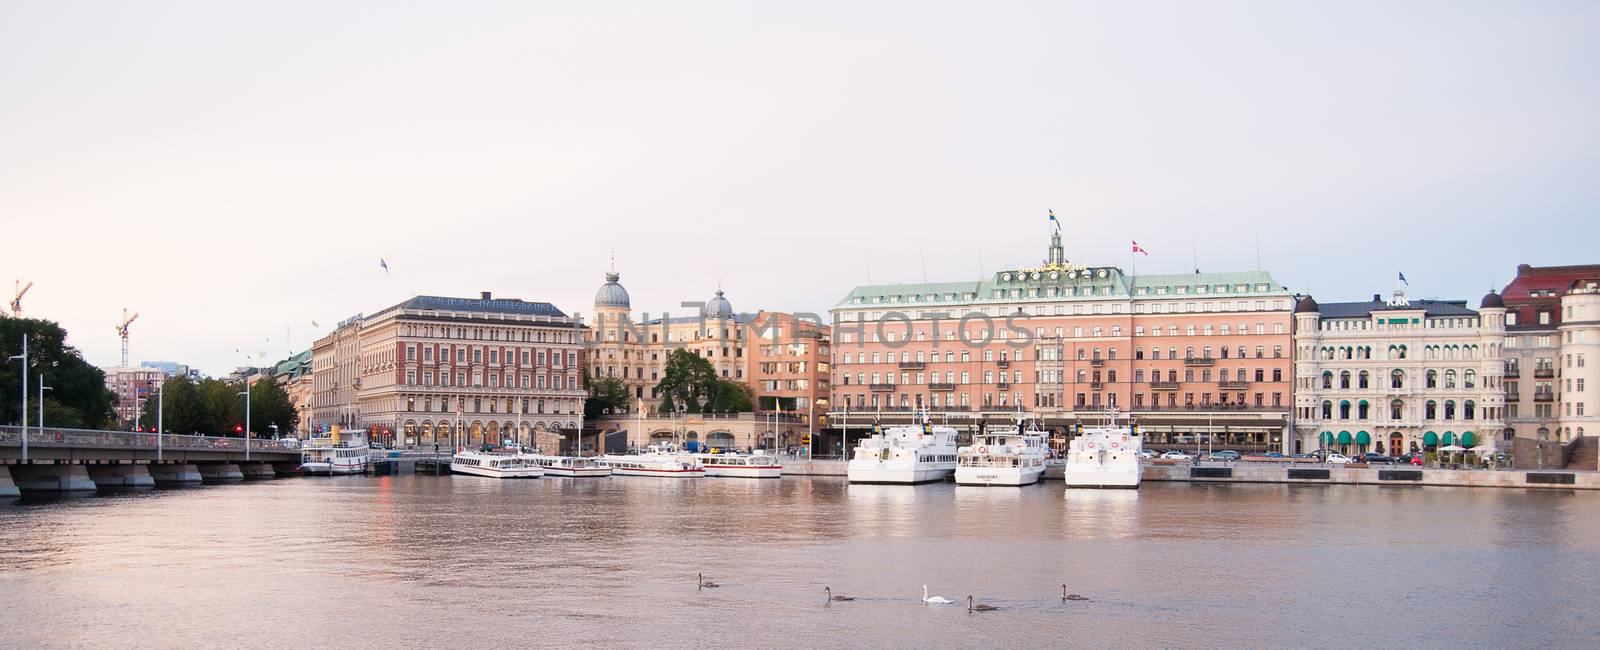 Stockholm view by javax